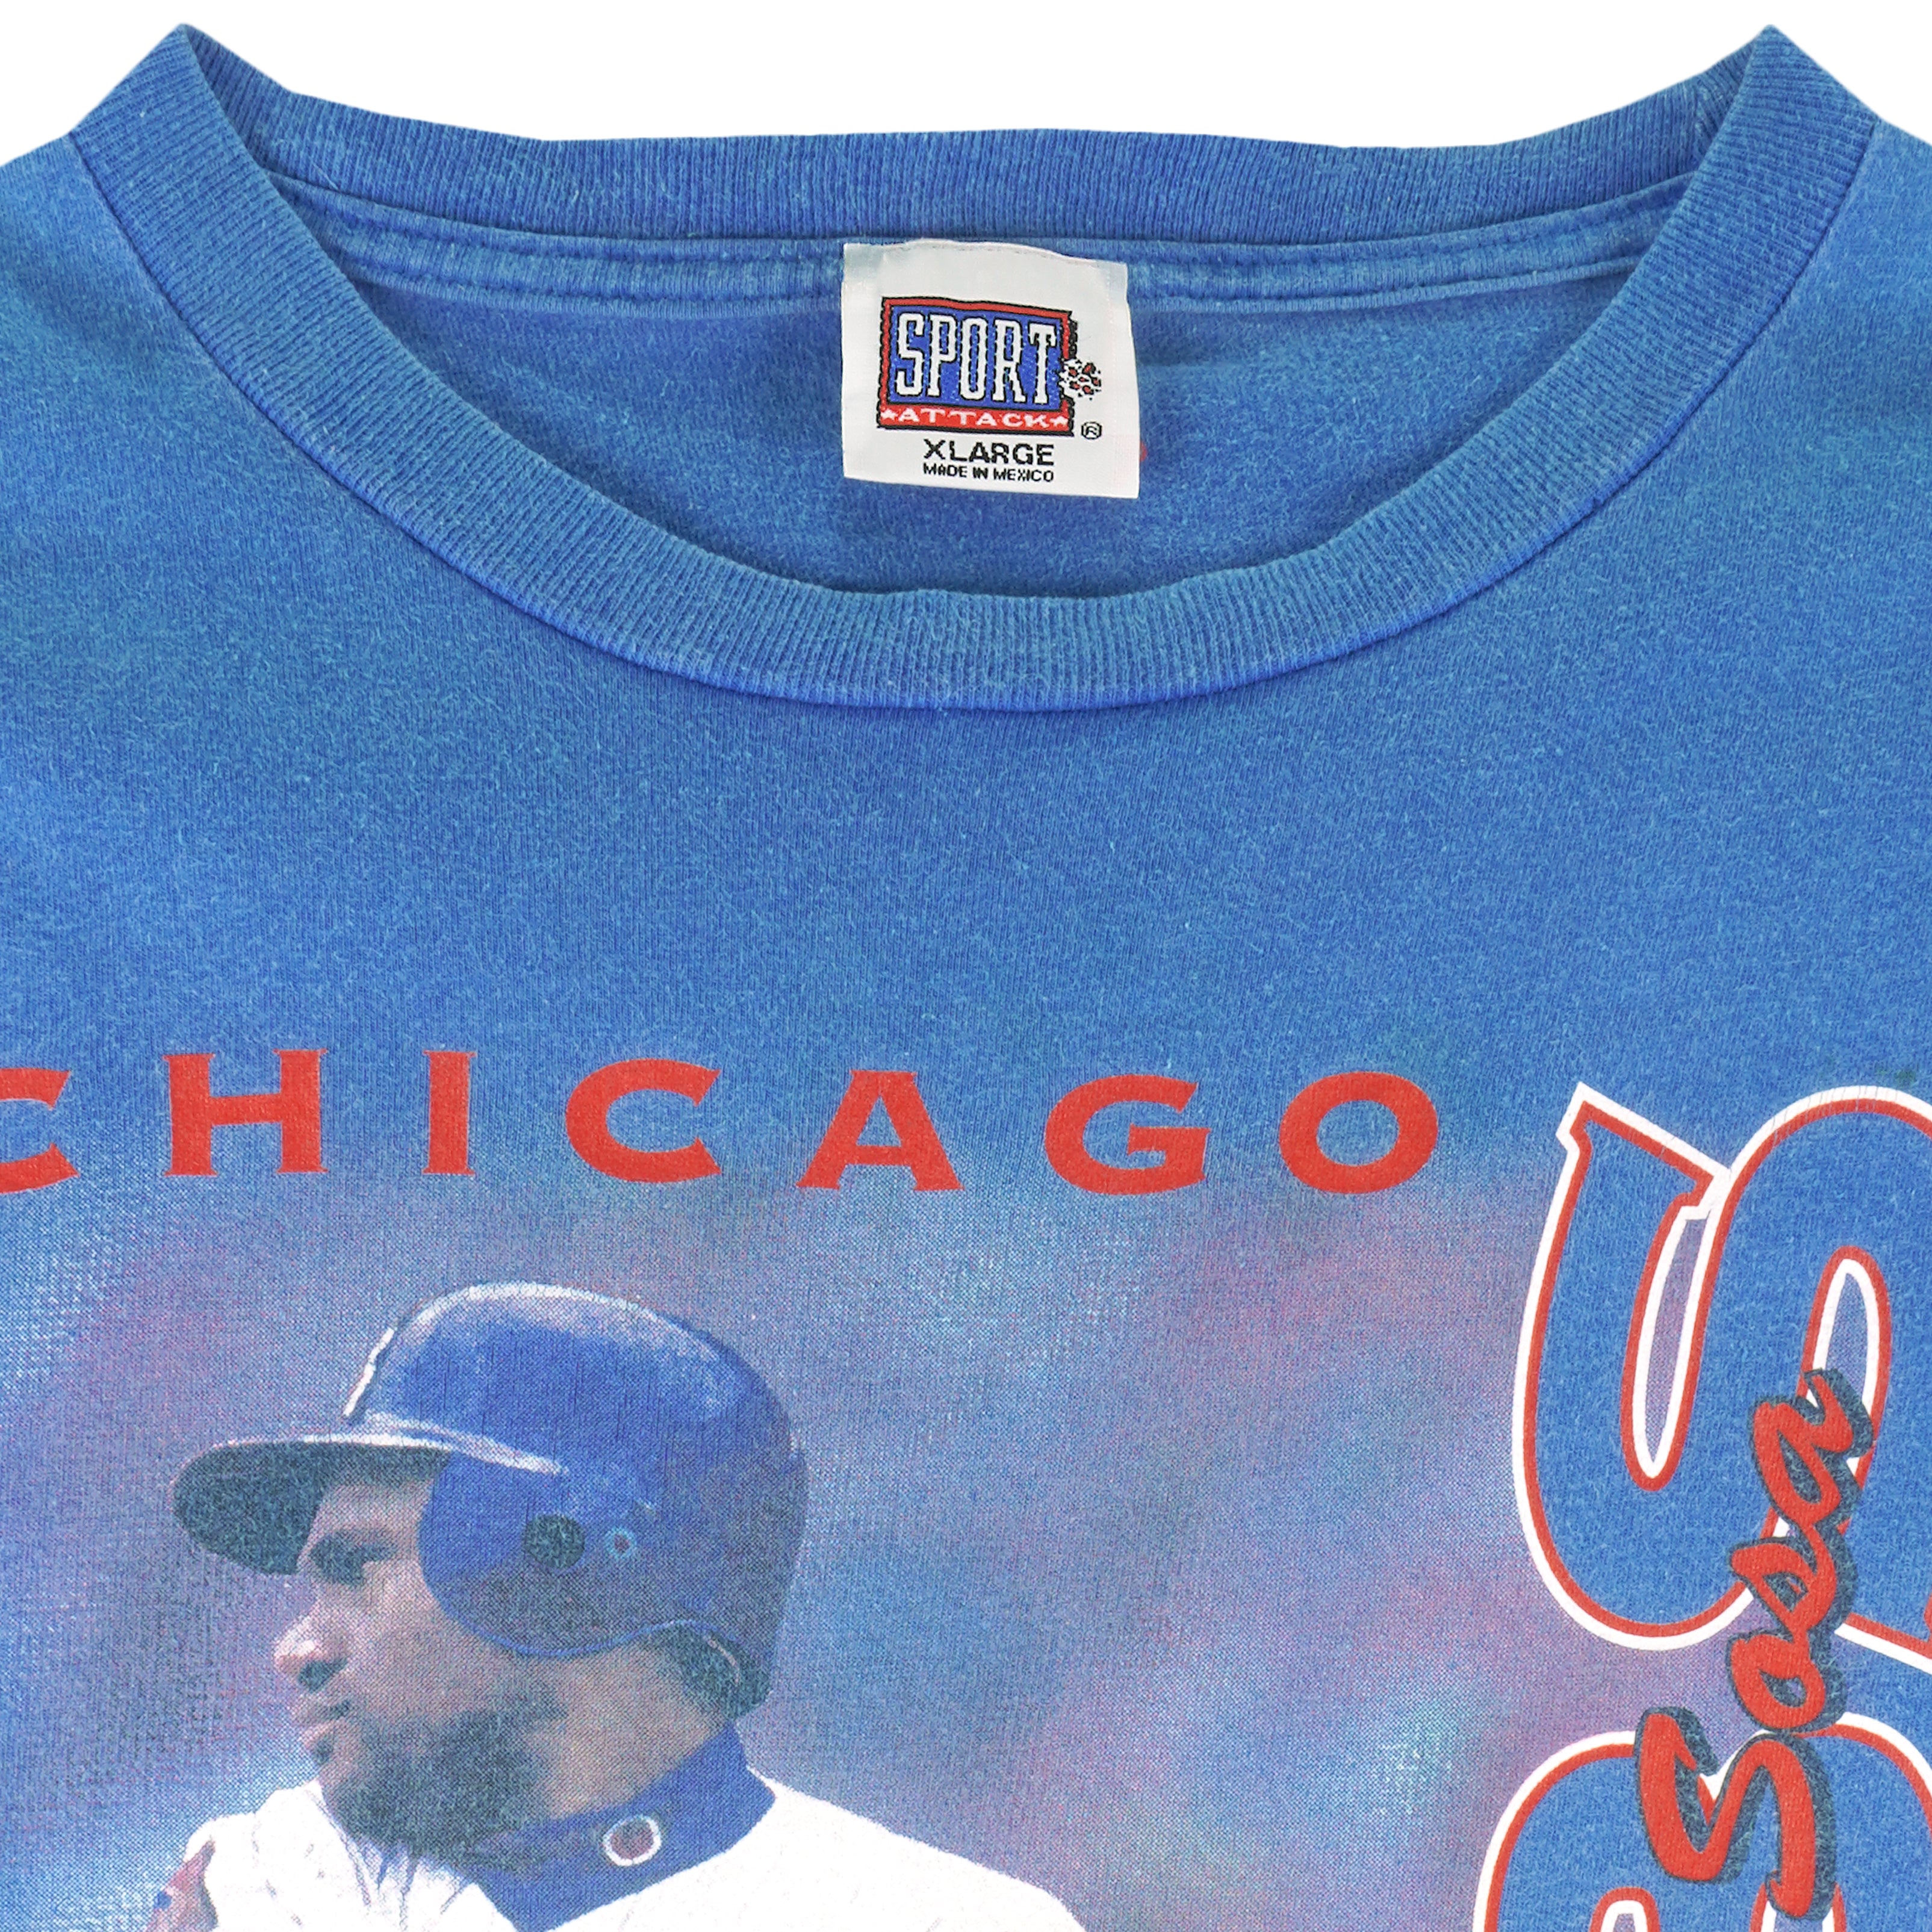 MLB VINTAGE 1998 CHICAGO CUBS WILD CARD PLAYOFF SEASON T SHIRT SIZE XL